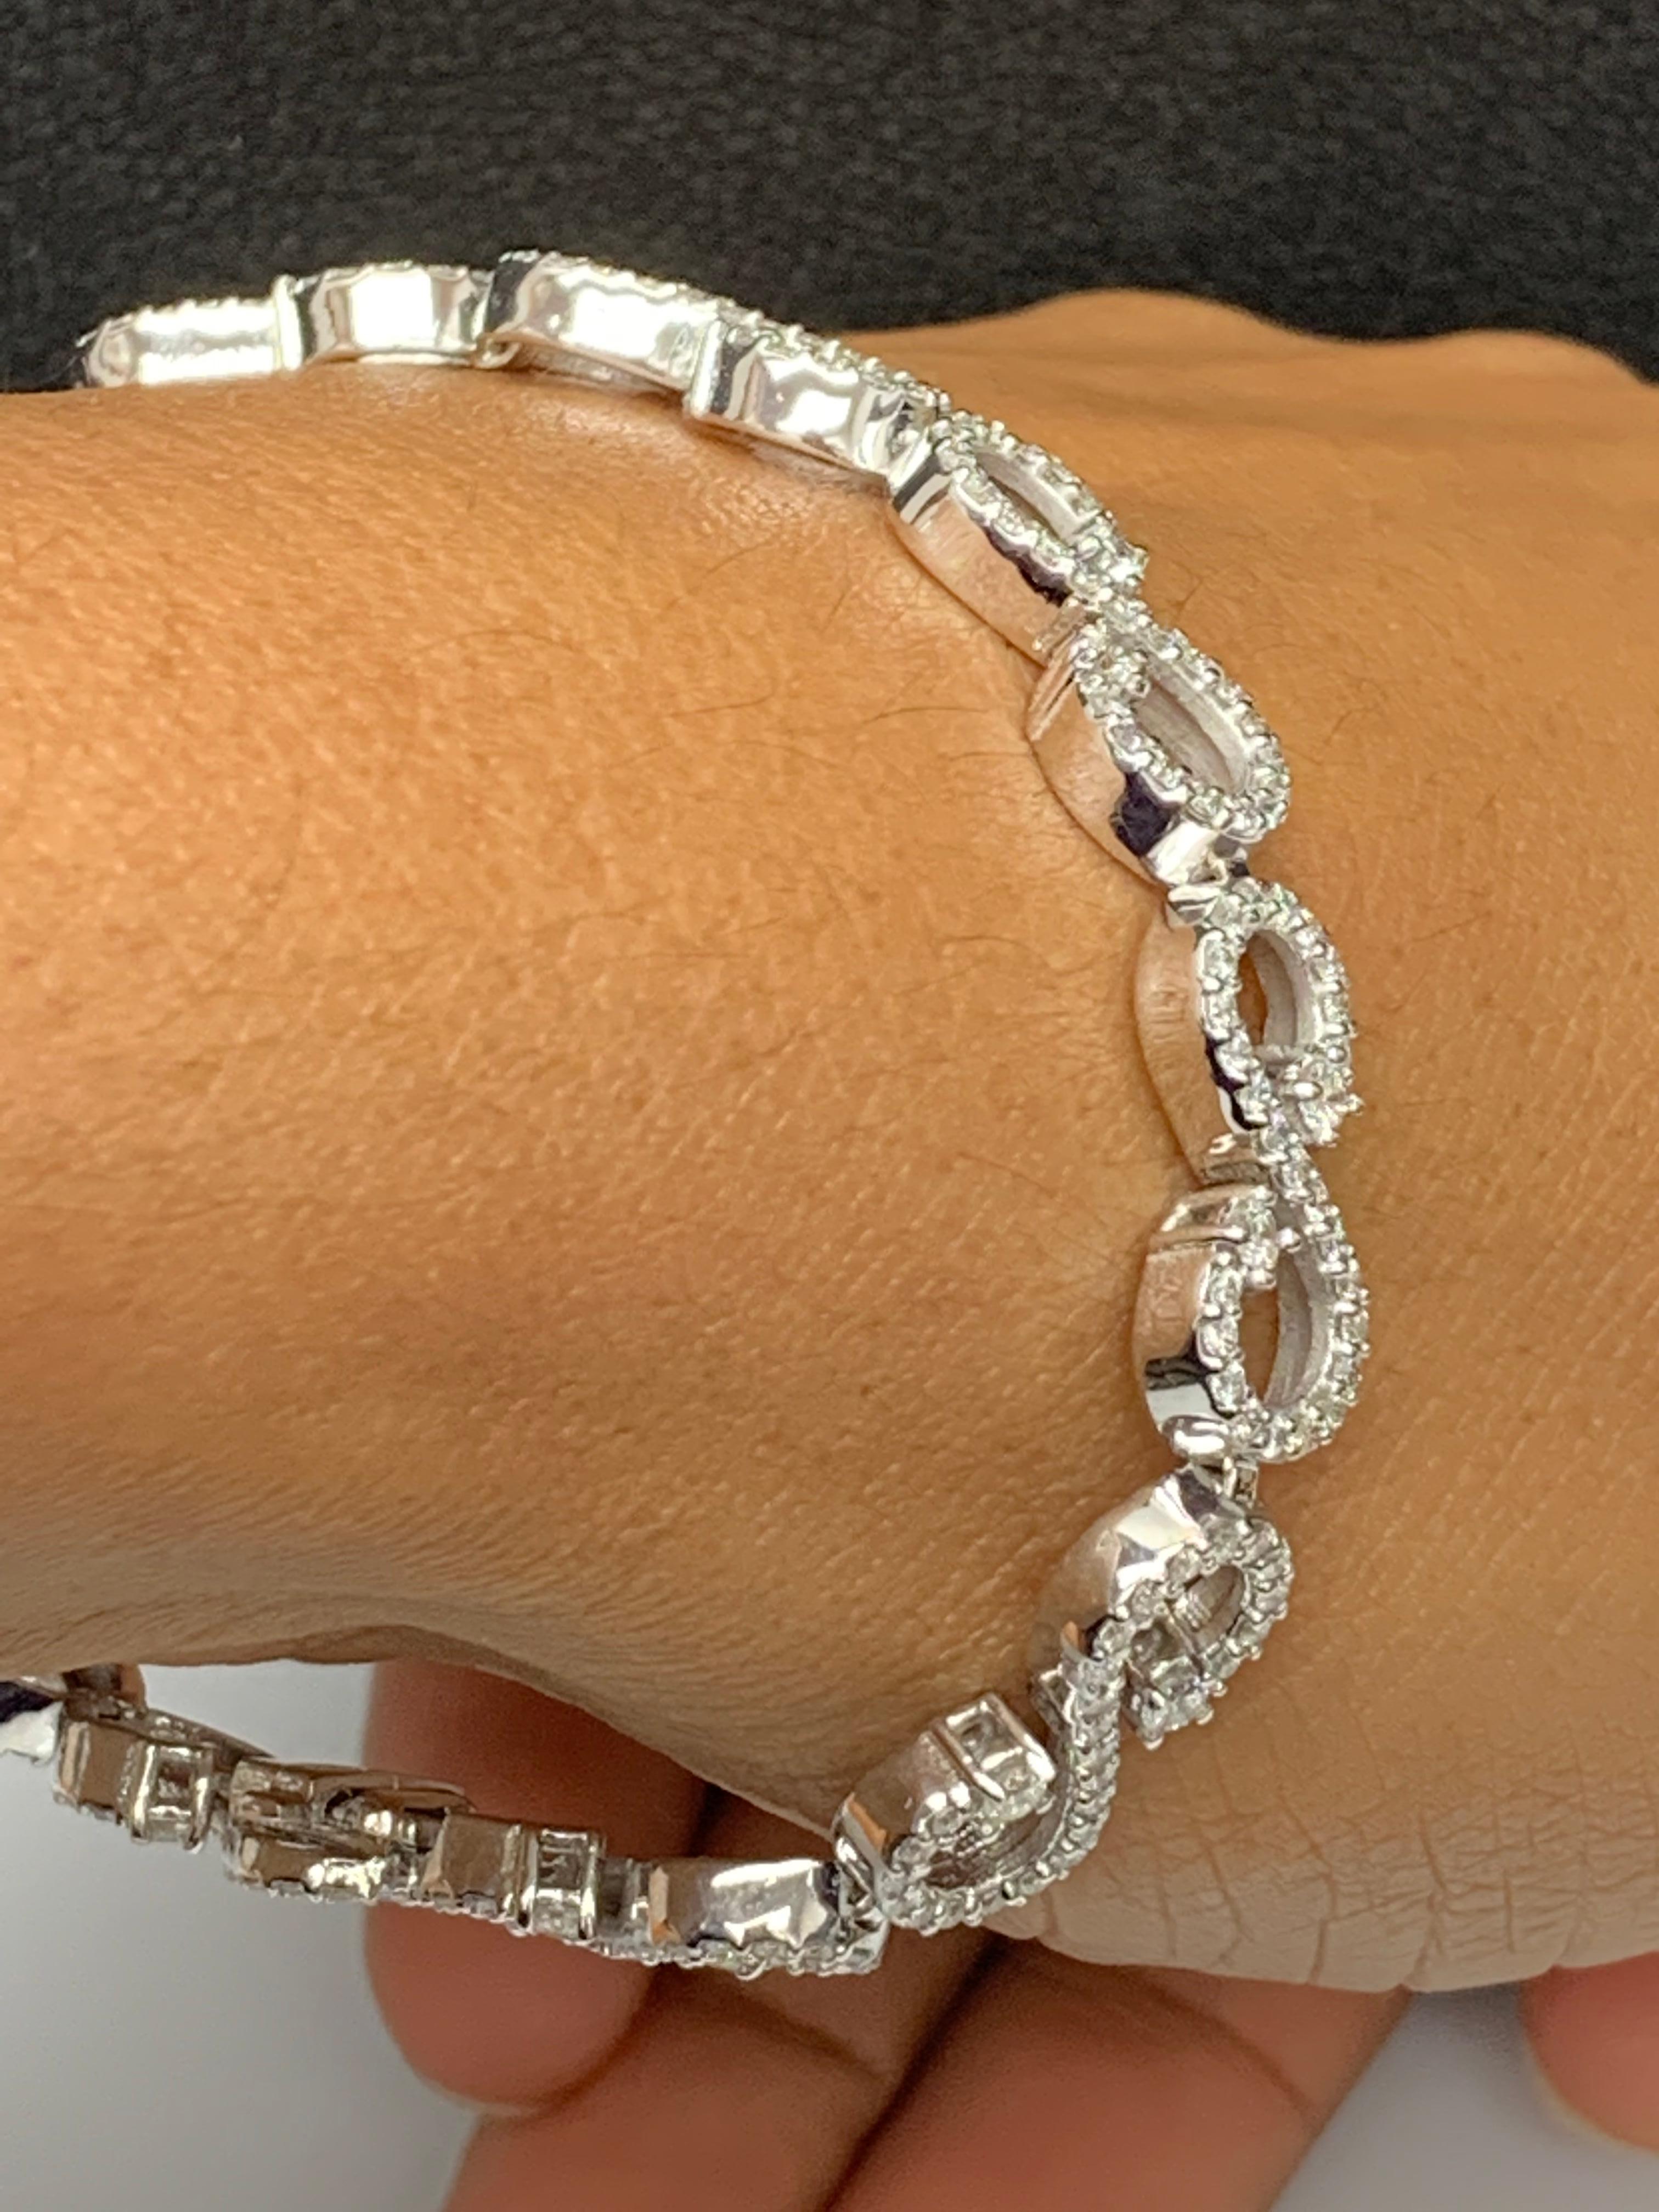 A beautiful bracelet showcasing open-work design, set with round brilliant diamonds set in a horizonntal  